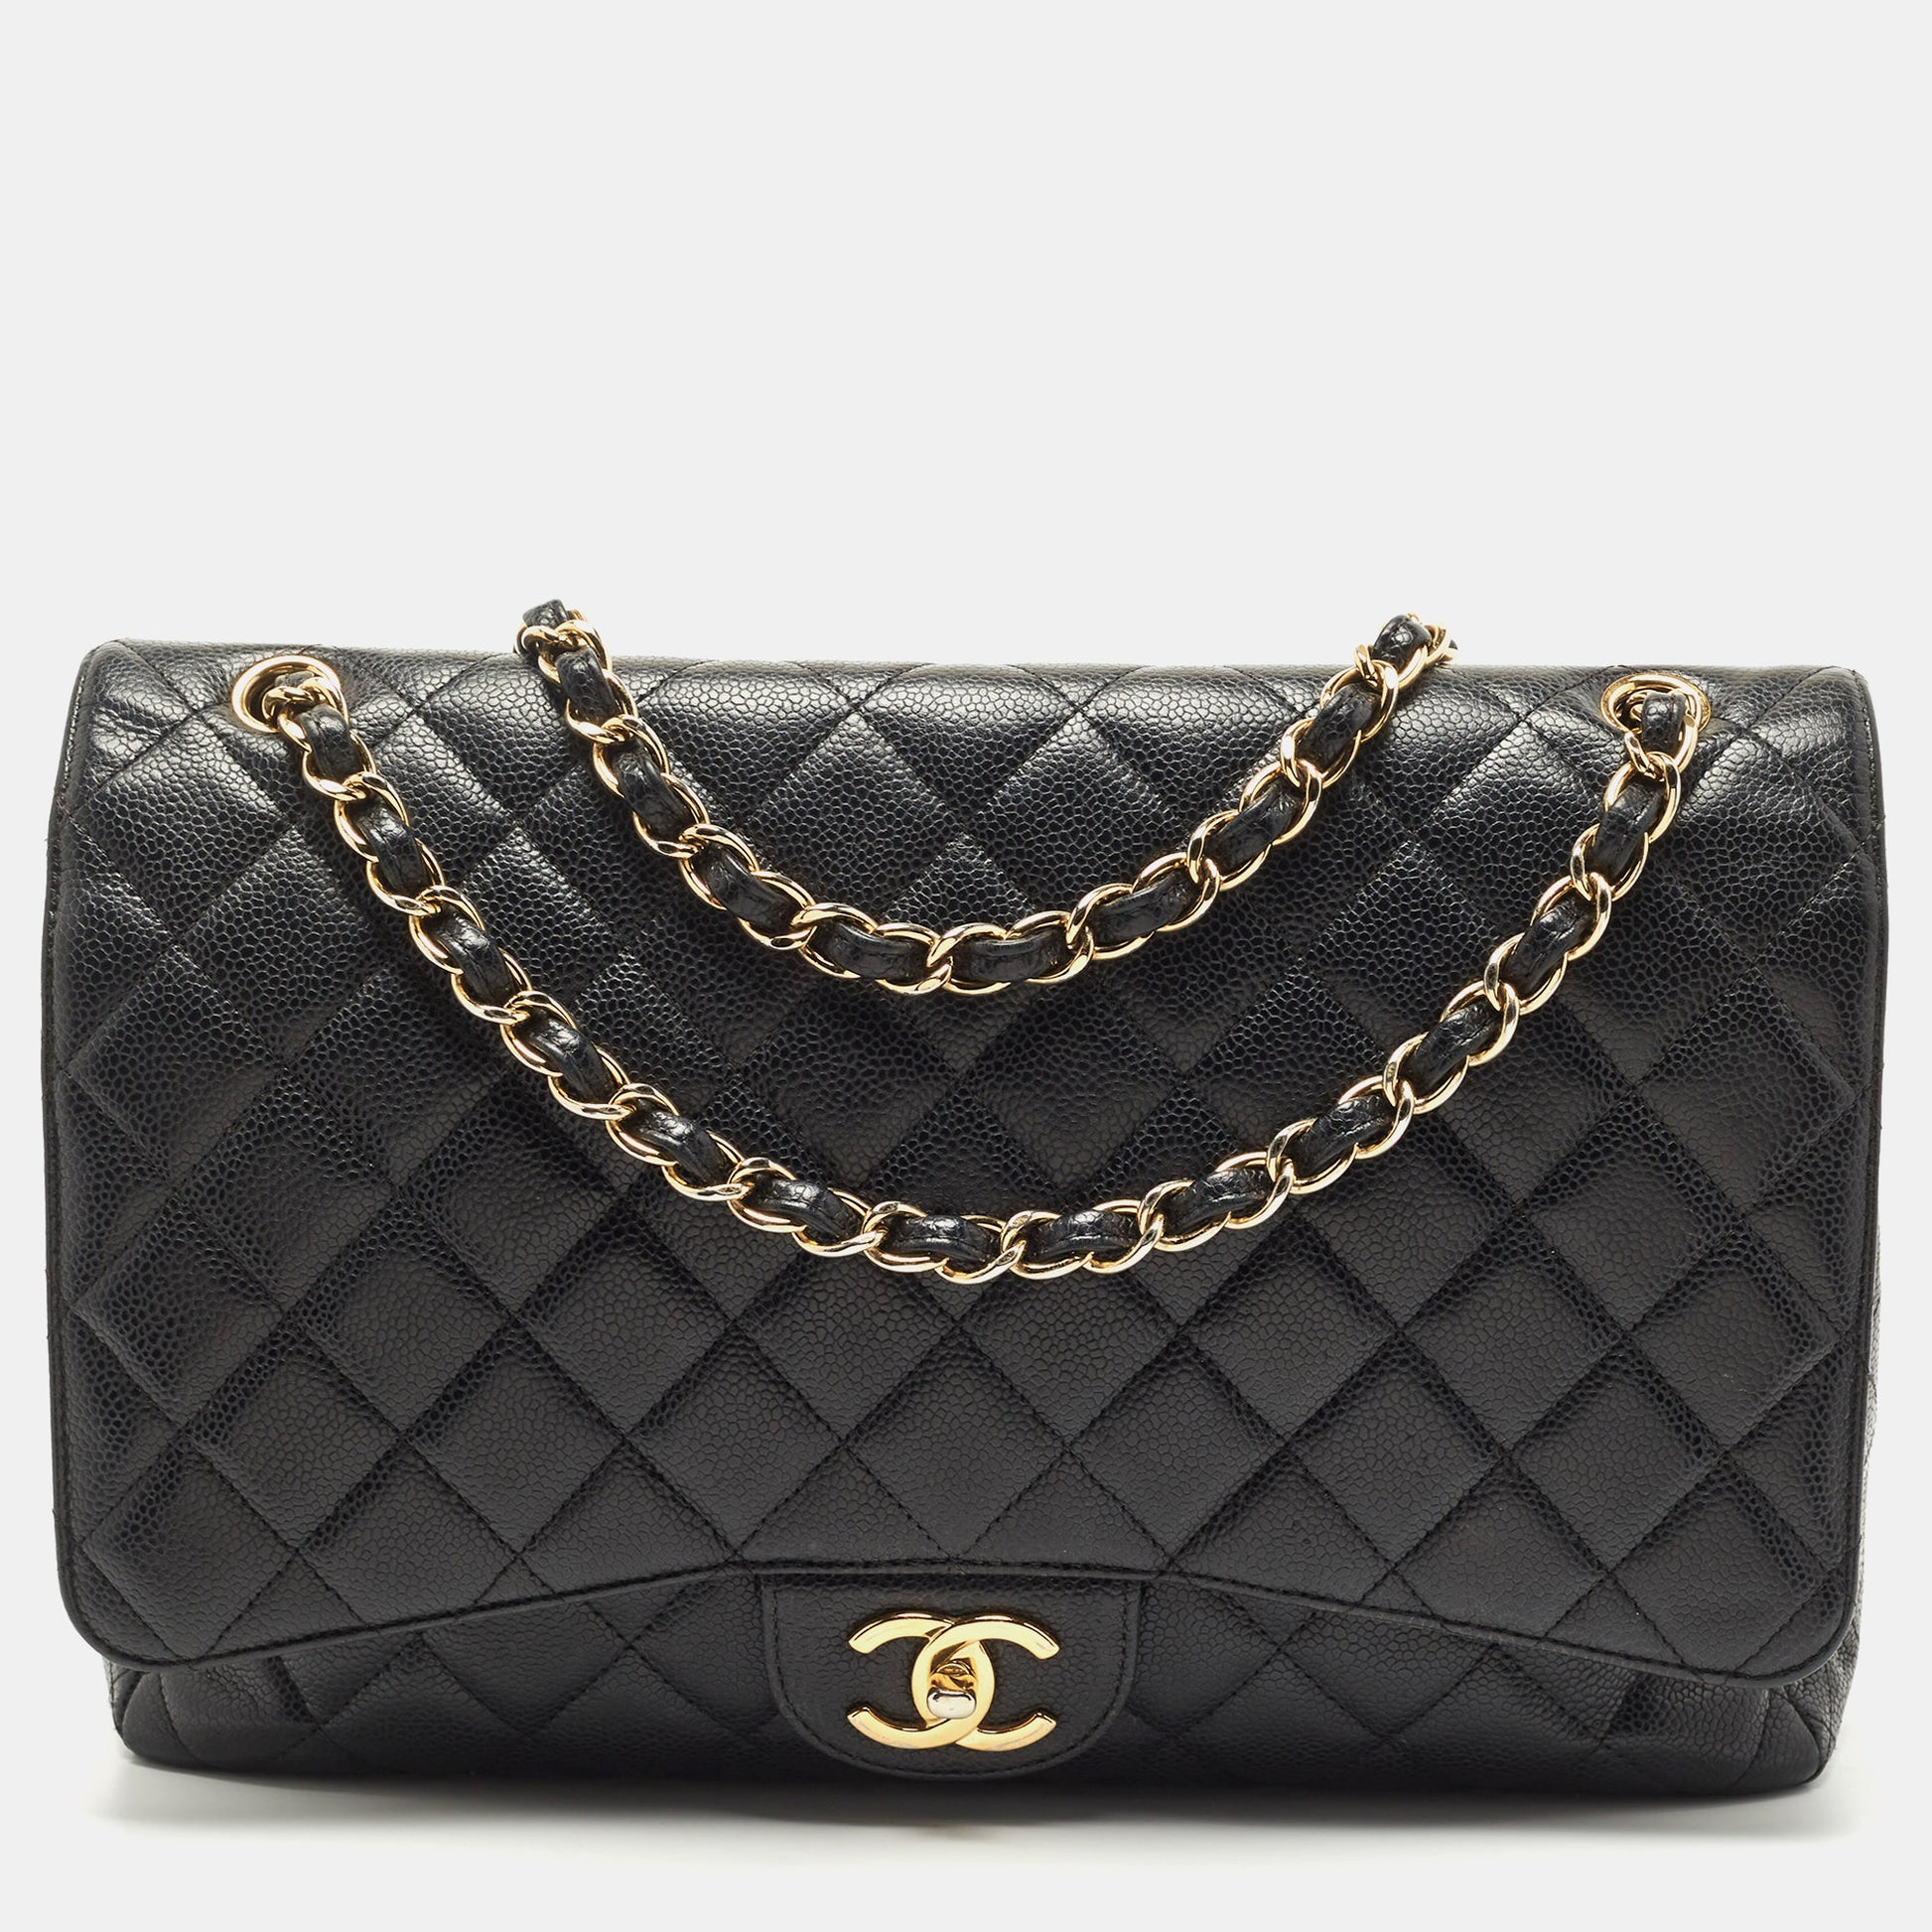 CHANEL Black Caviar Leather Maxi Classic Double Flap Bag